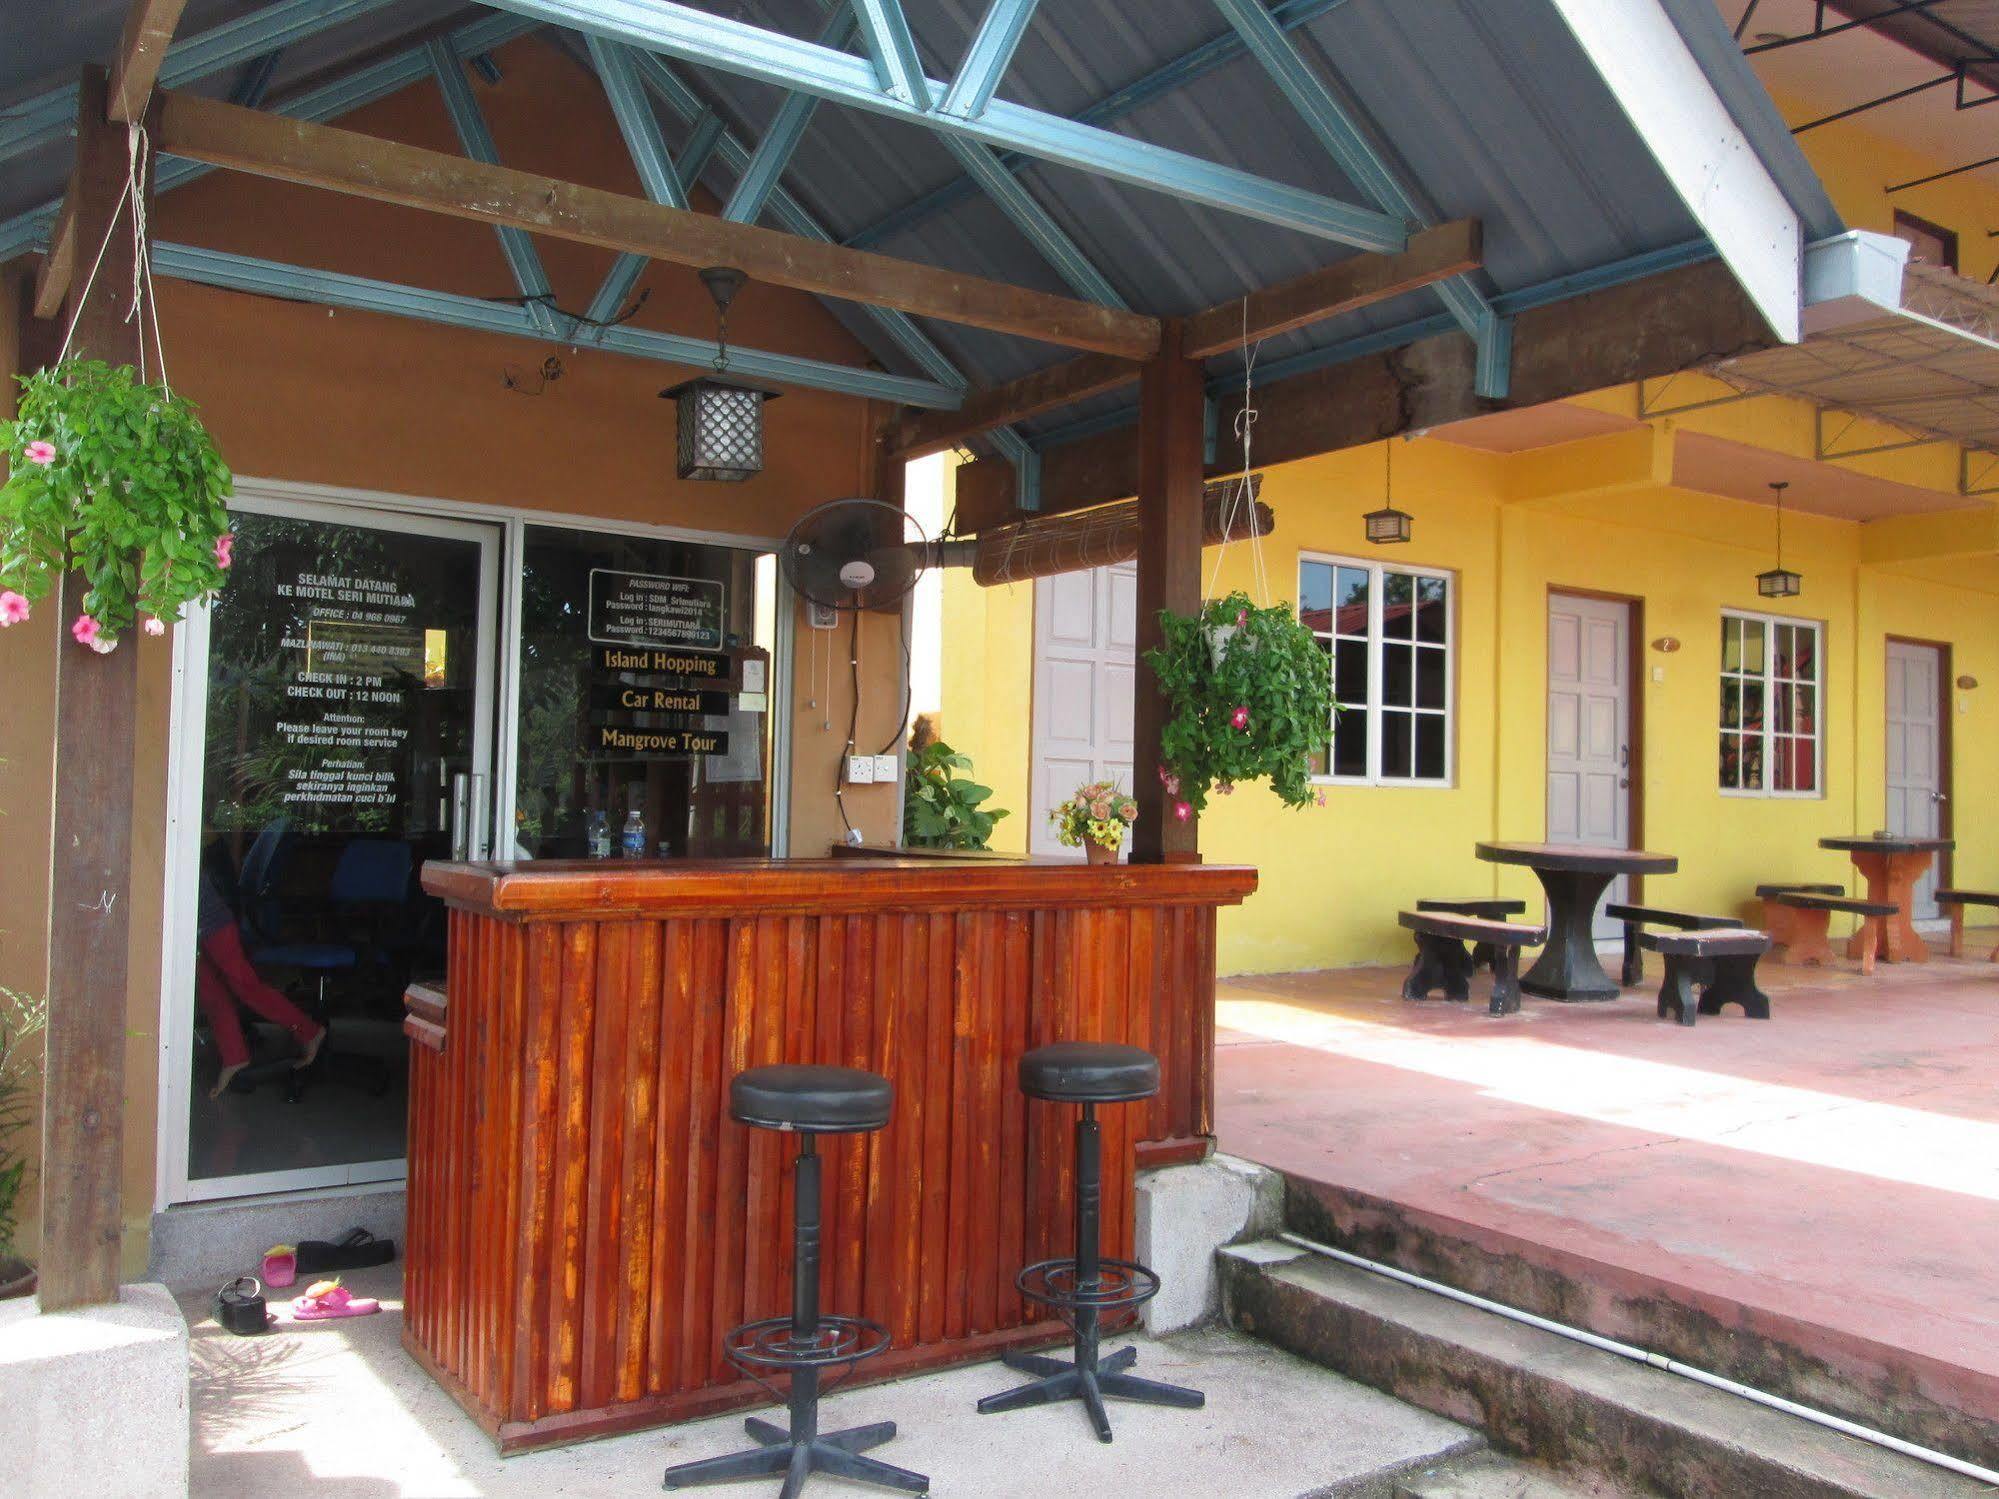 Motel Seri Mutiara Kuah Exterior photo